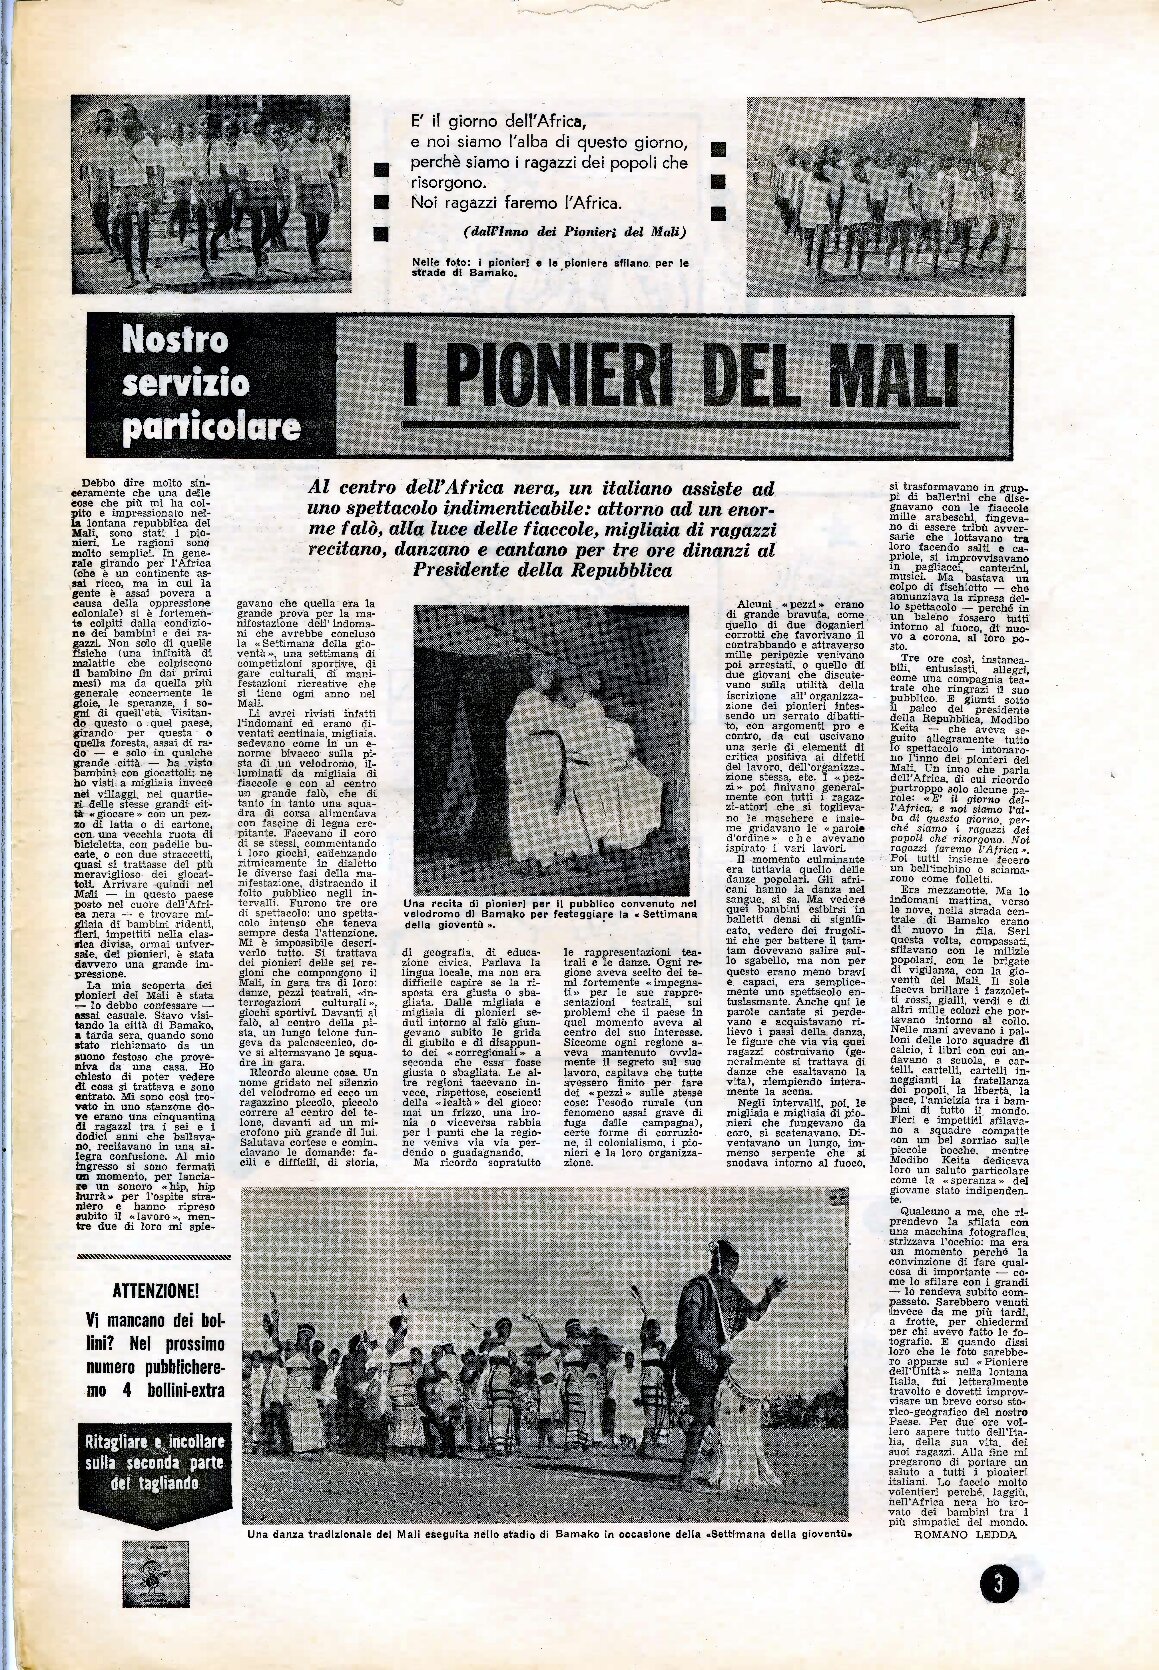 Pionieri del Mali n40. 8 ottobre 1964